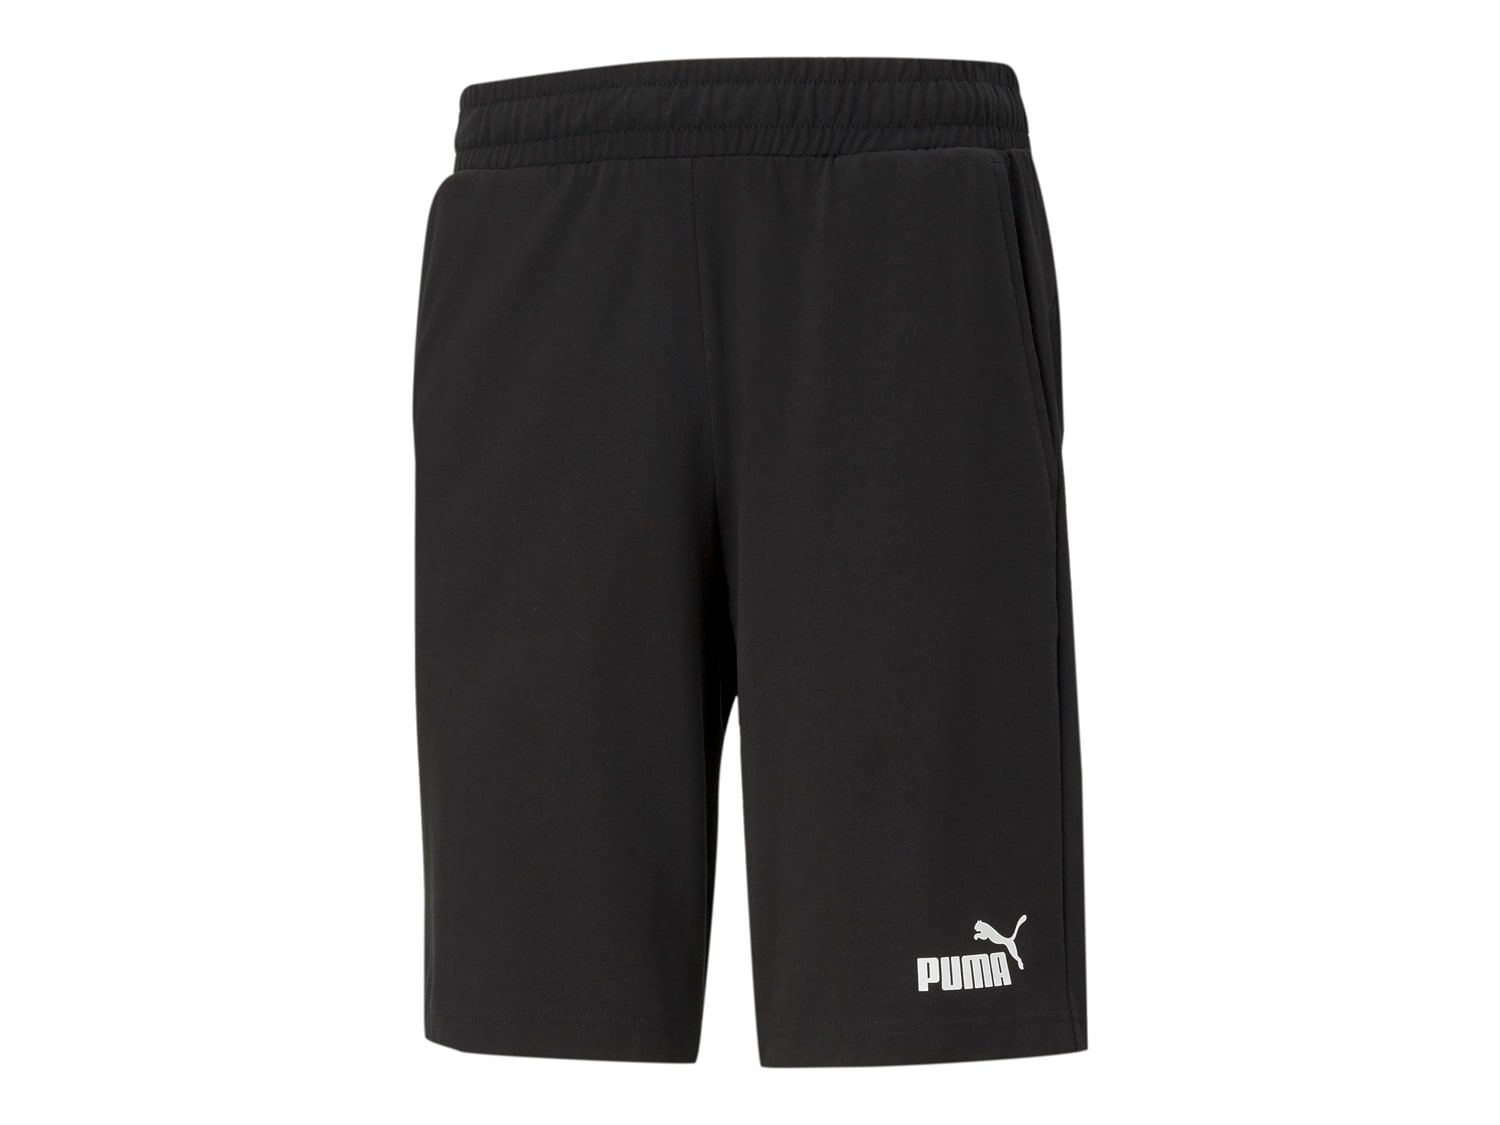 Essentials DSW | Shipping Puma Shorts - Free Men\'s